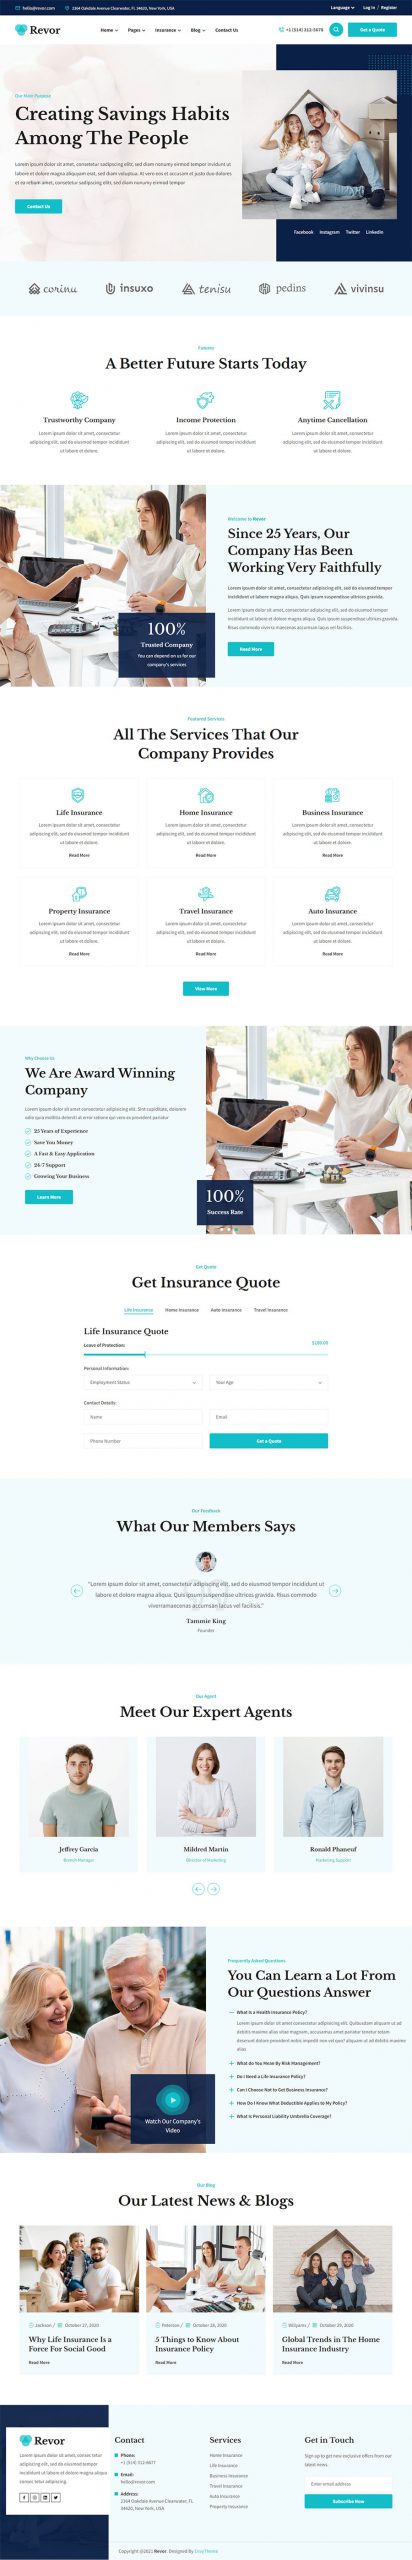 Mẫu Website Bảo hiểm TMI_Insurance_23012